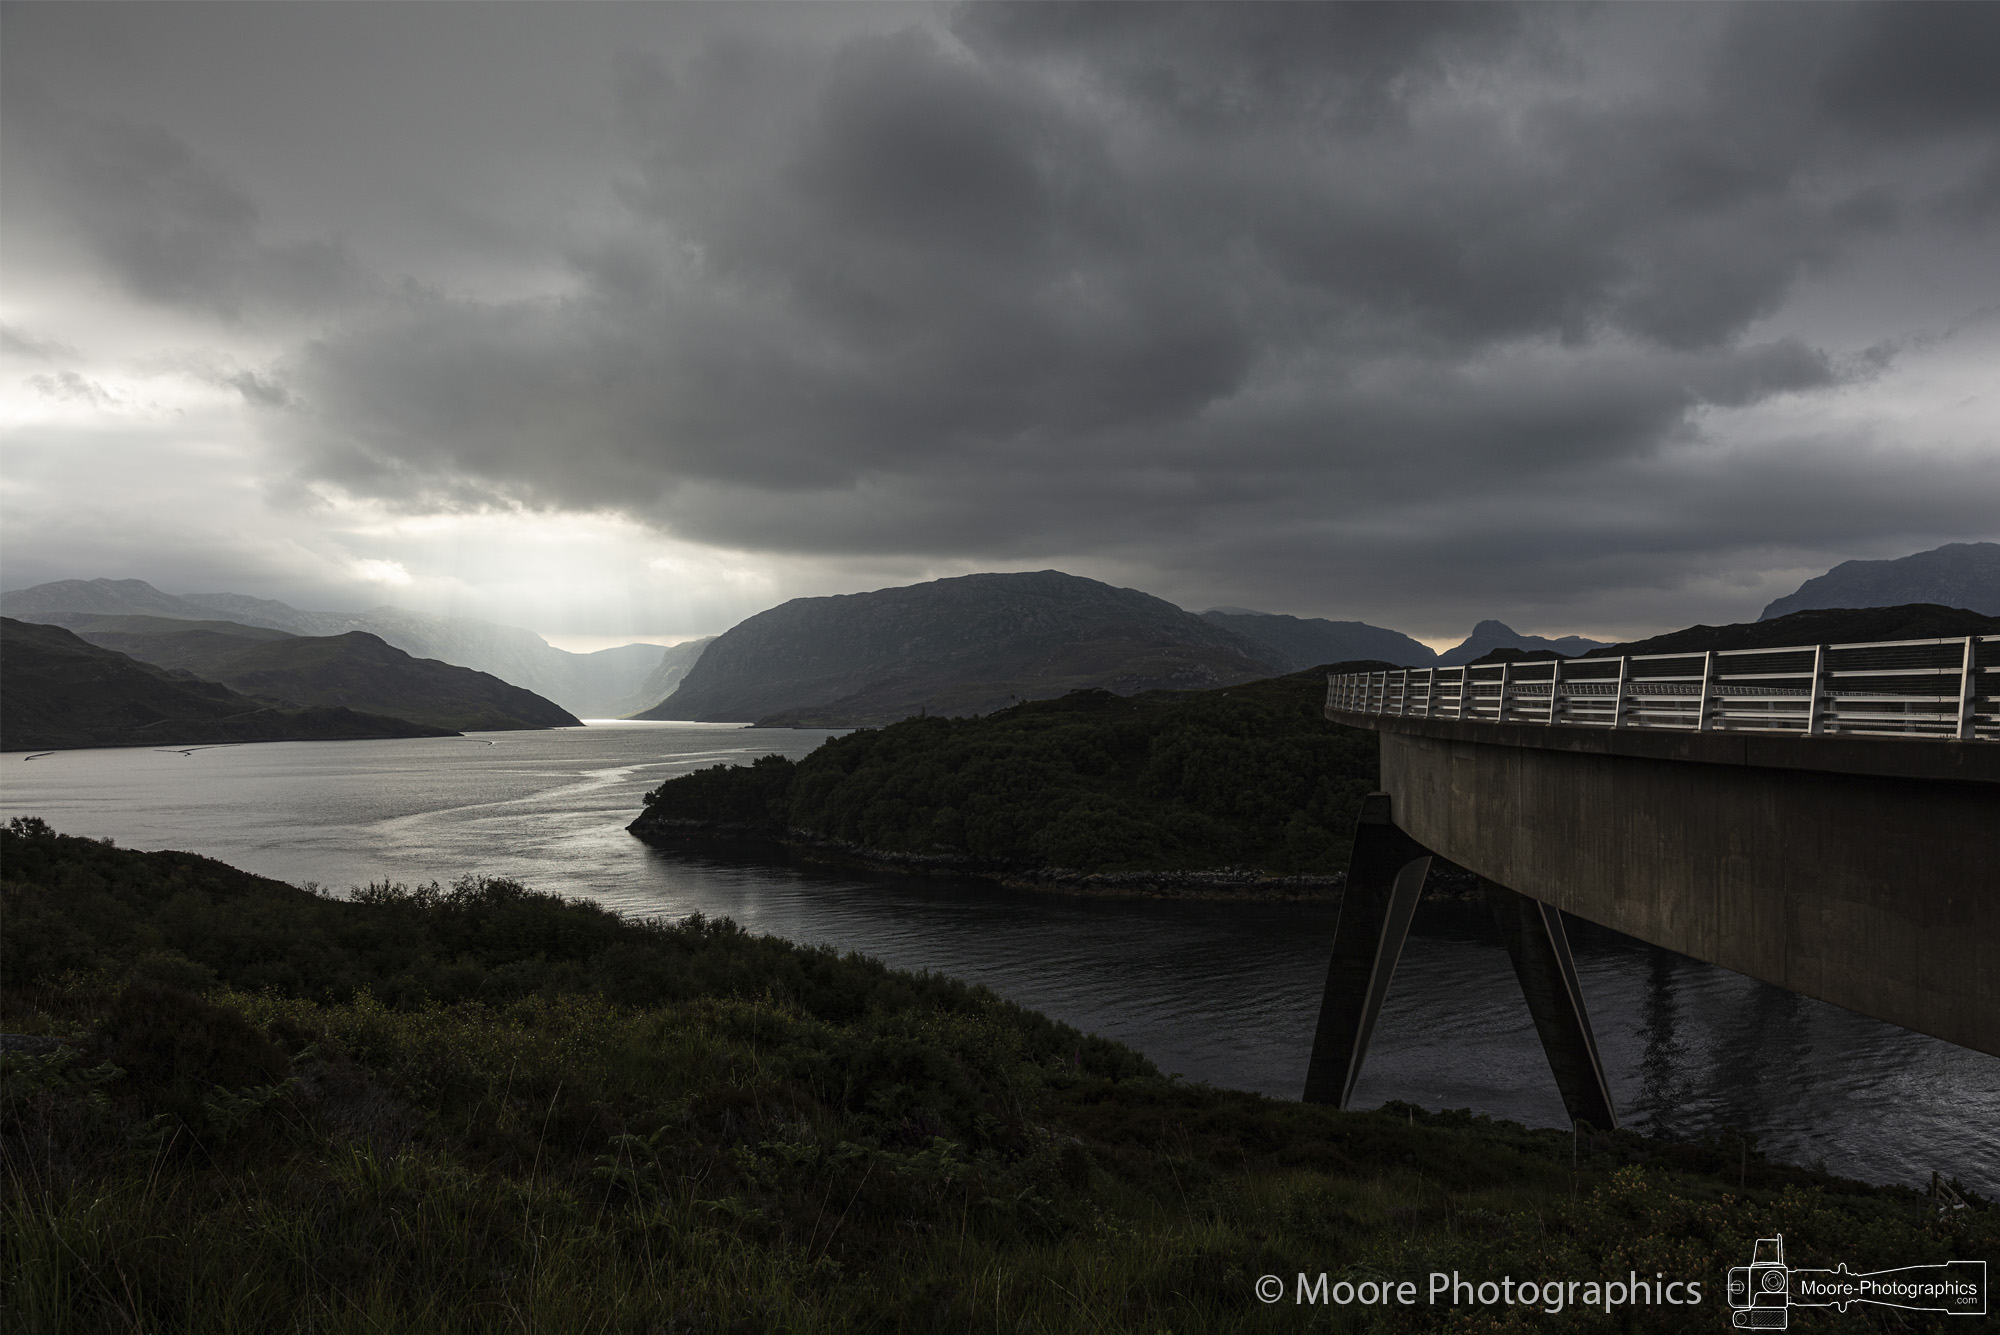 Moore Photographics - Travel Photography - Scotland